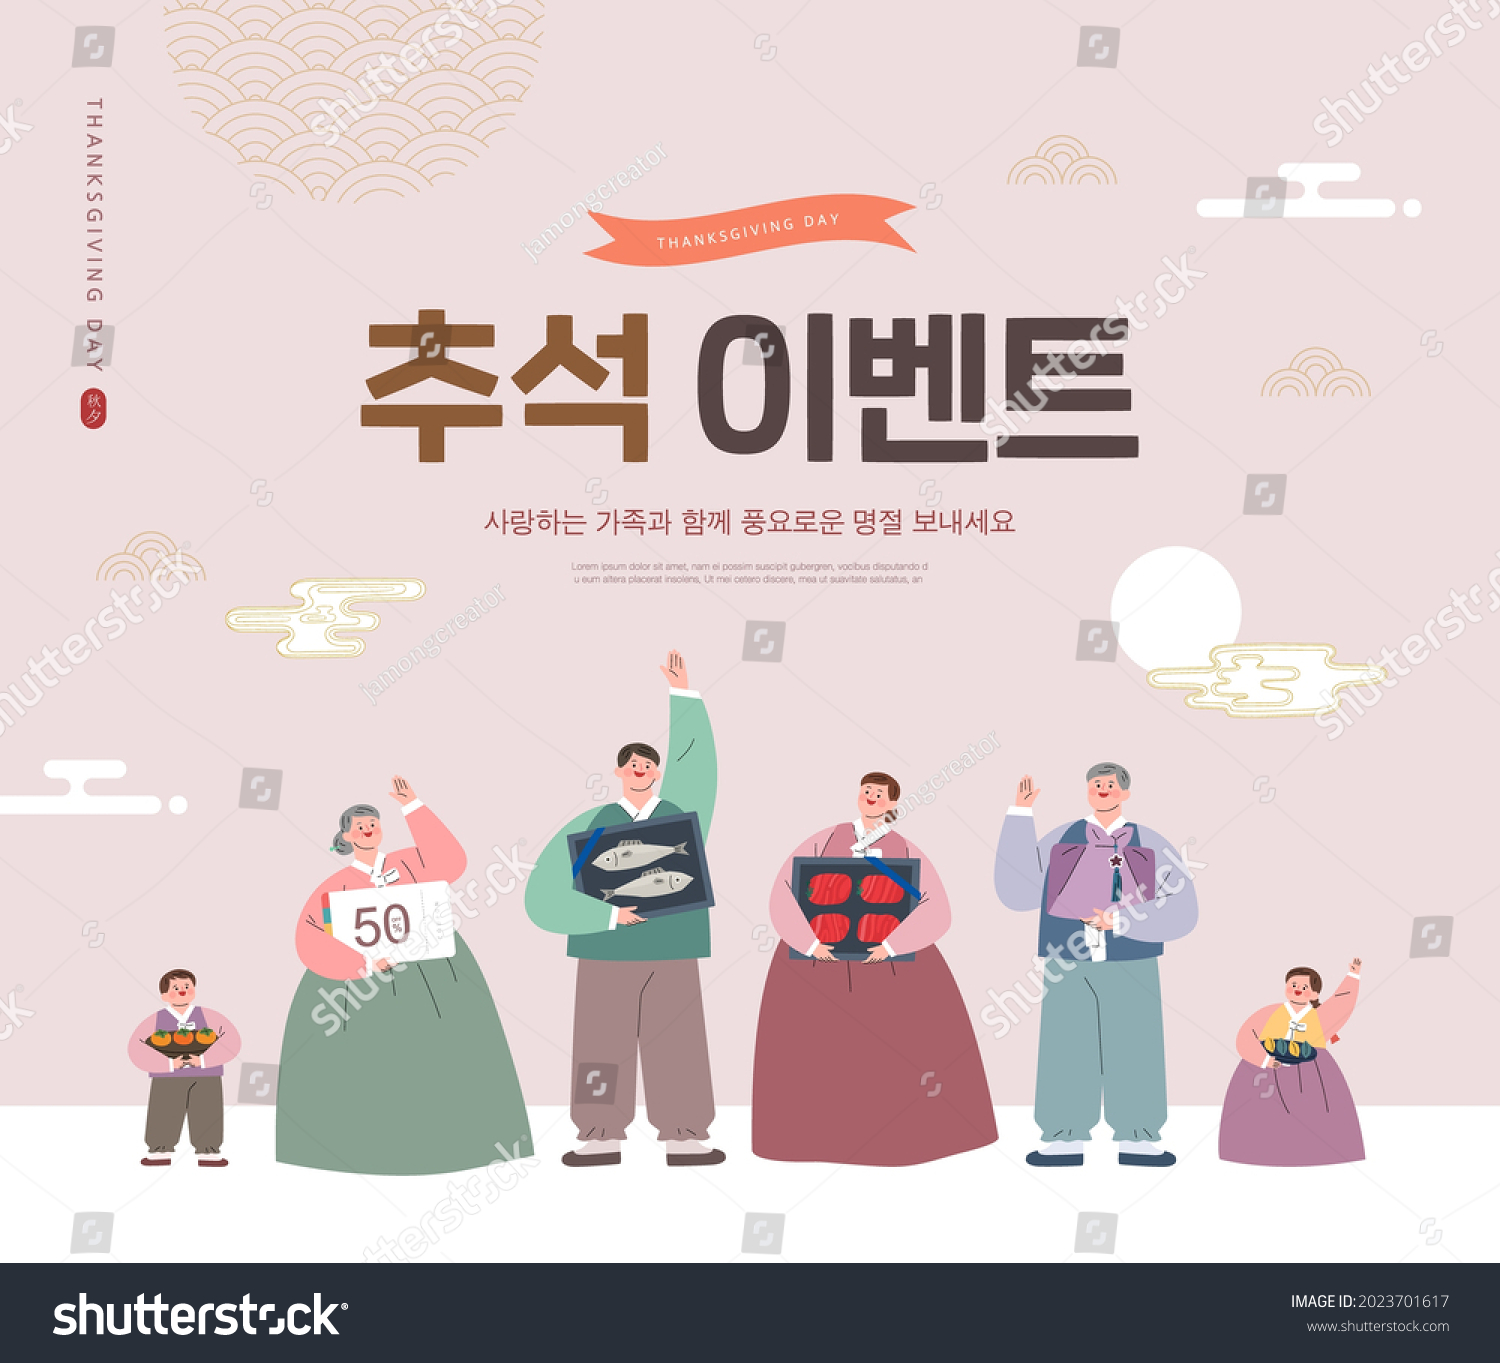 Korean Thanksgiving Day shopping event pop-up Illustration. Korean Translation: "Thanksgiving Day Event"  #2023701617